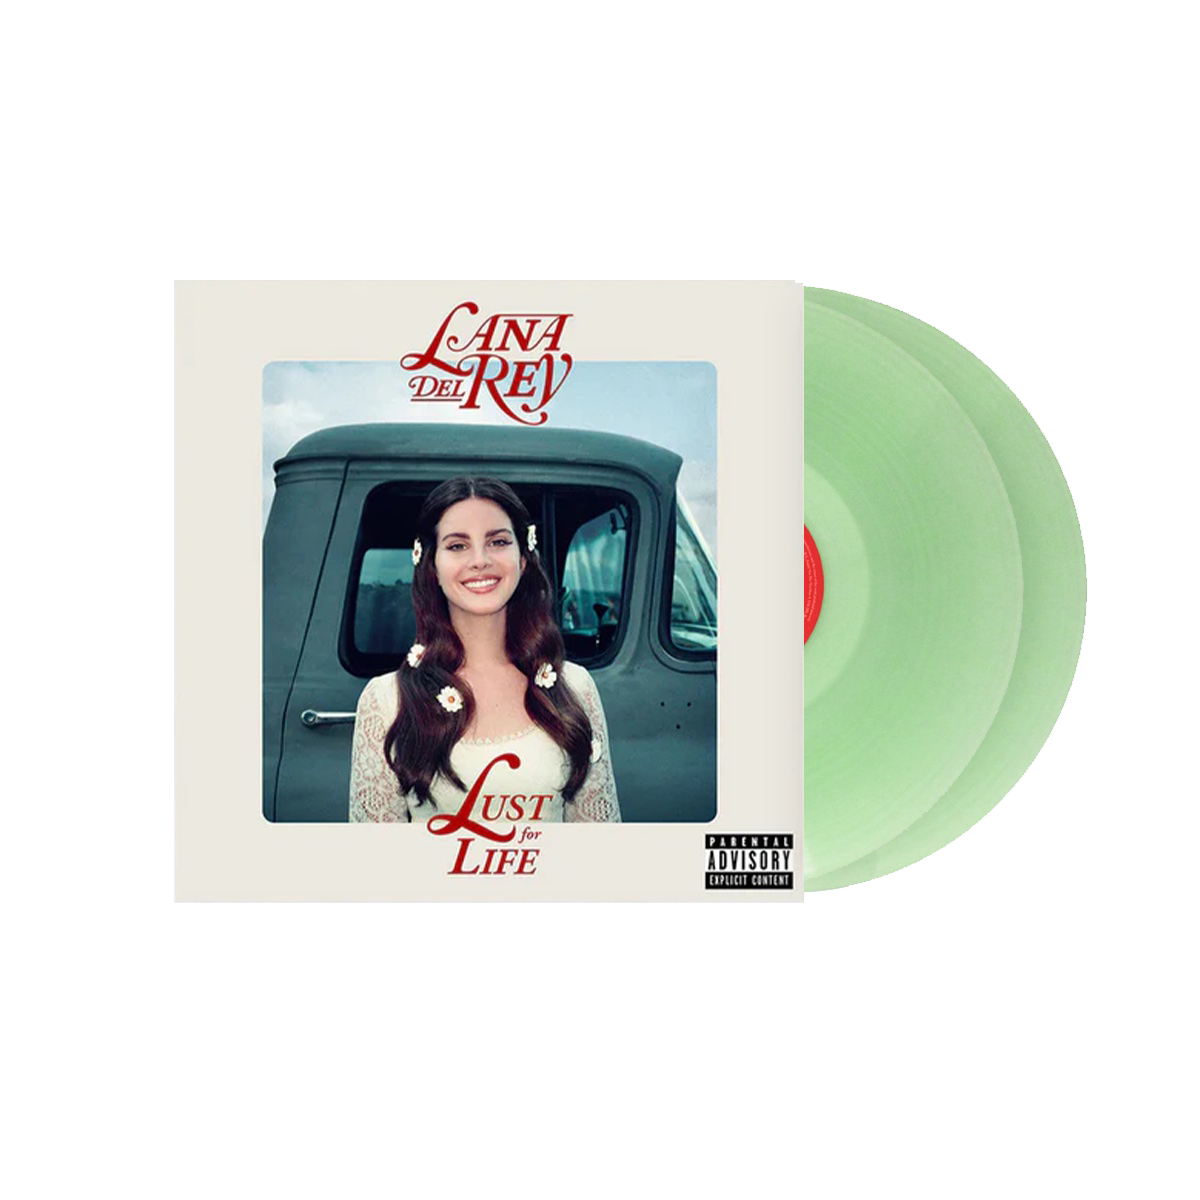 Lana Del Rey - Lust for Life Love. Single. Heart India